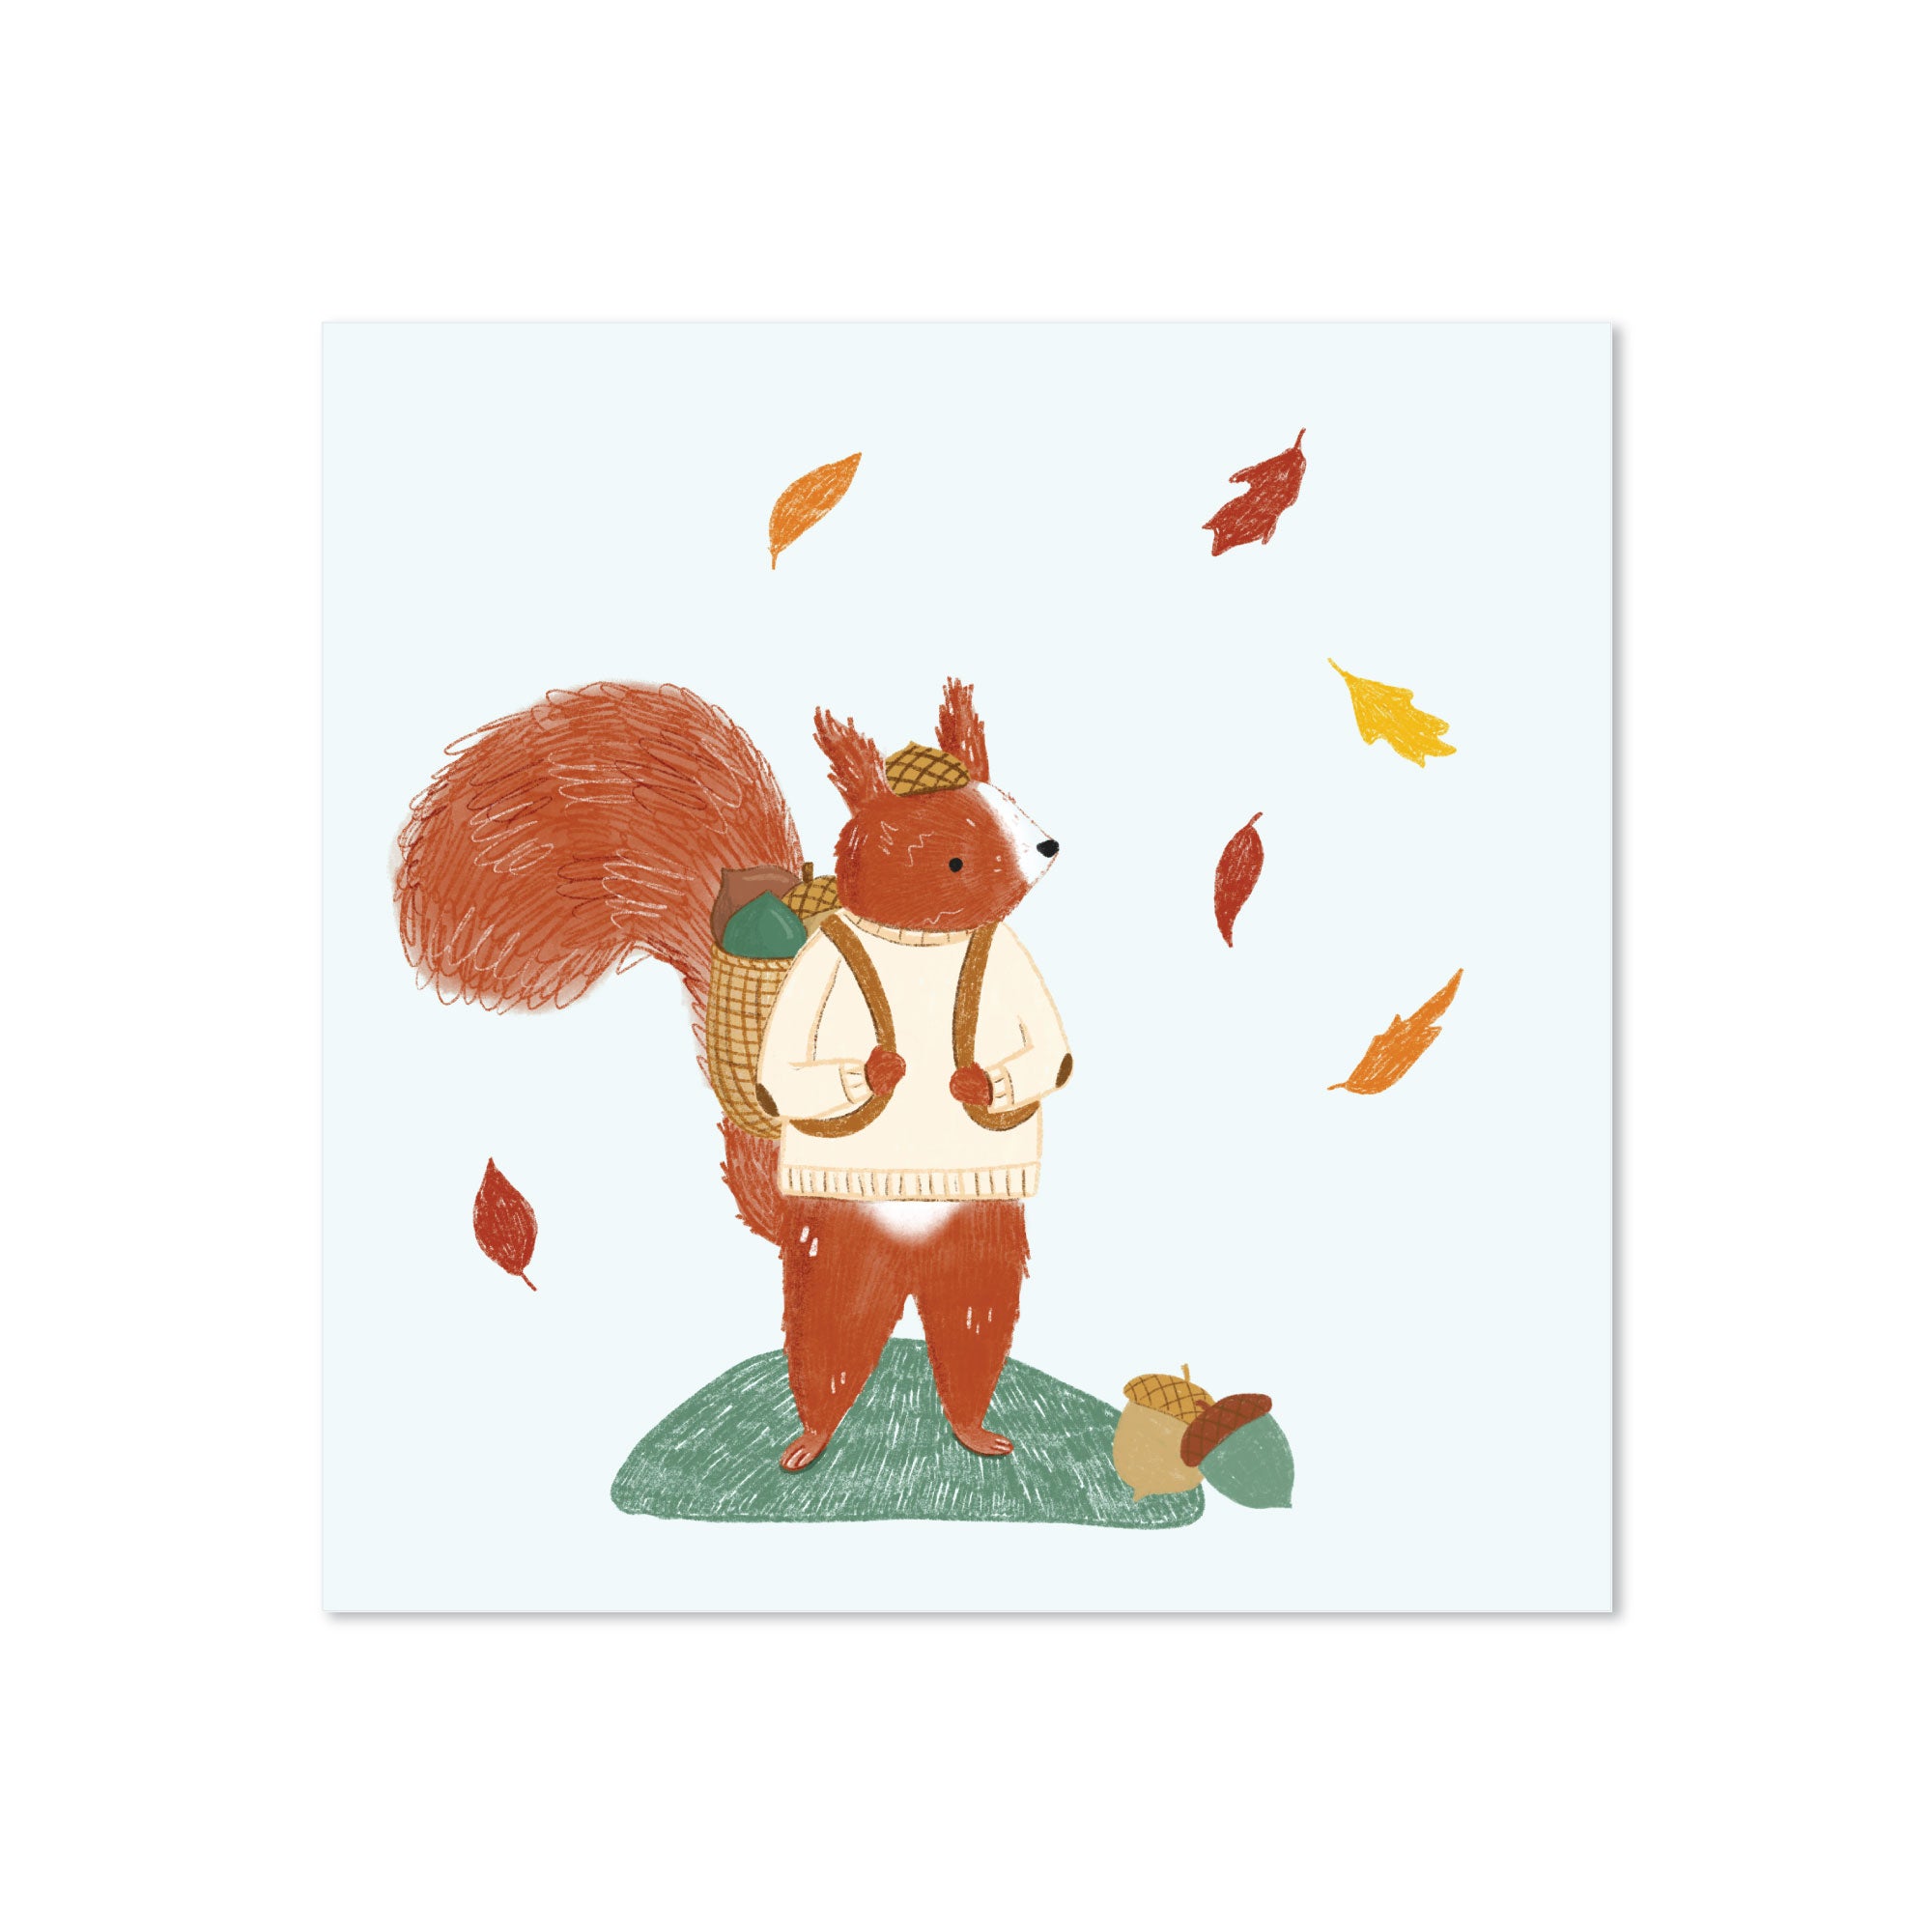 Red Squirrel Art Print